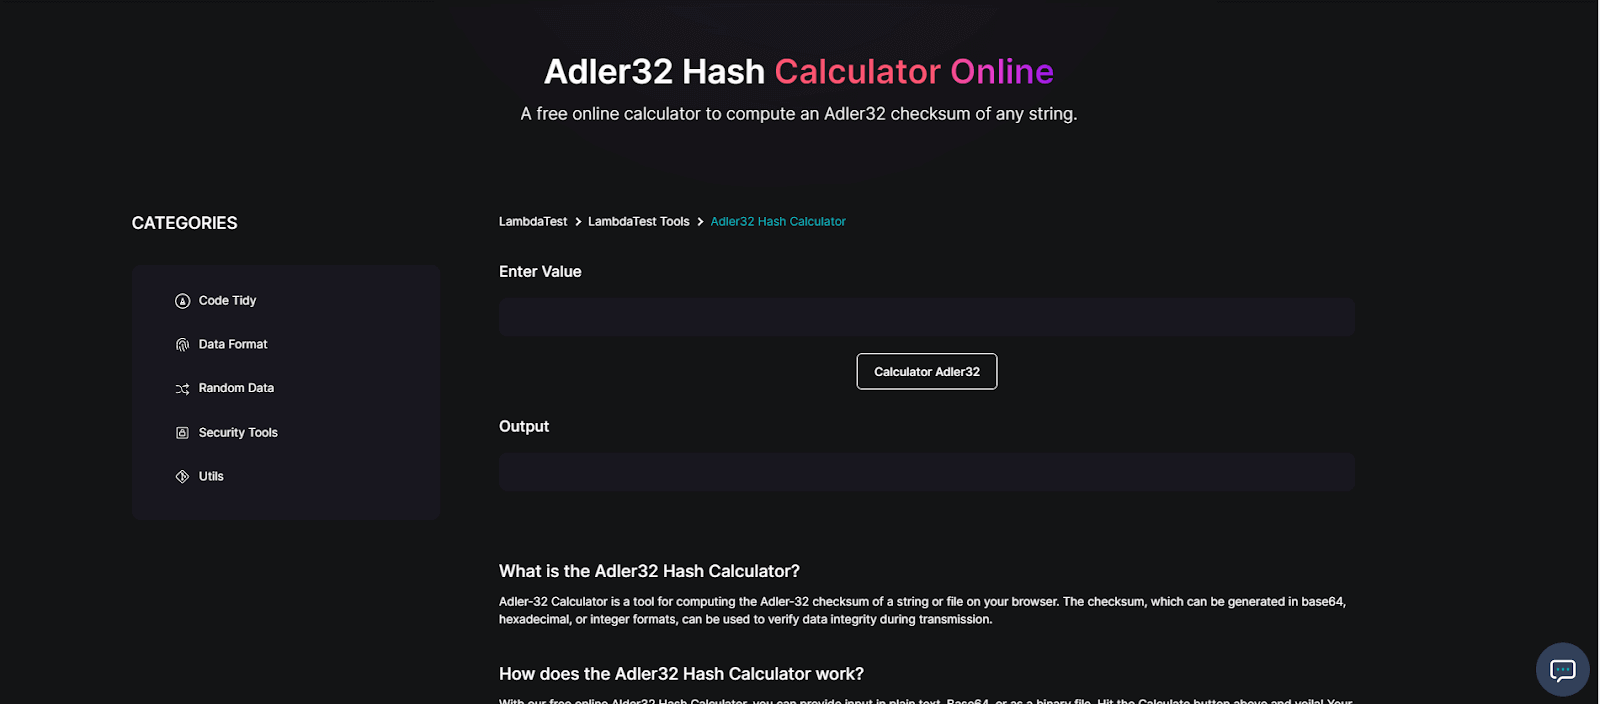 Adler32 Hash Calculator